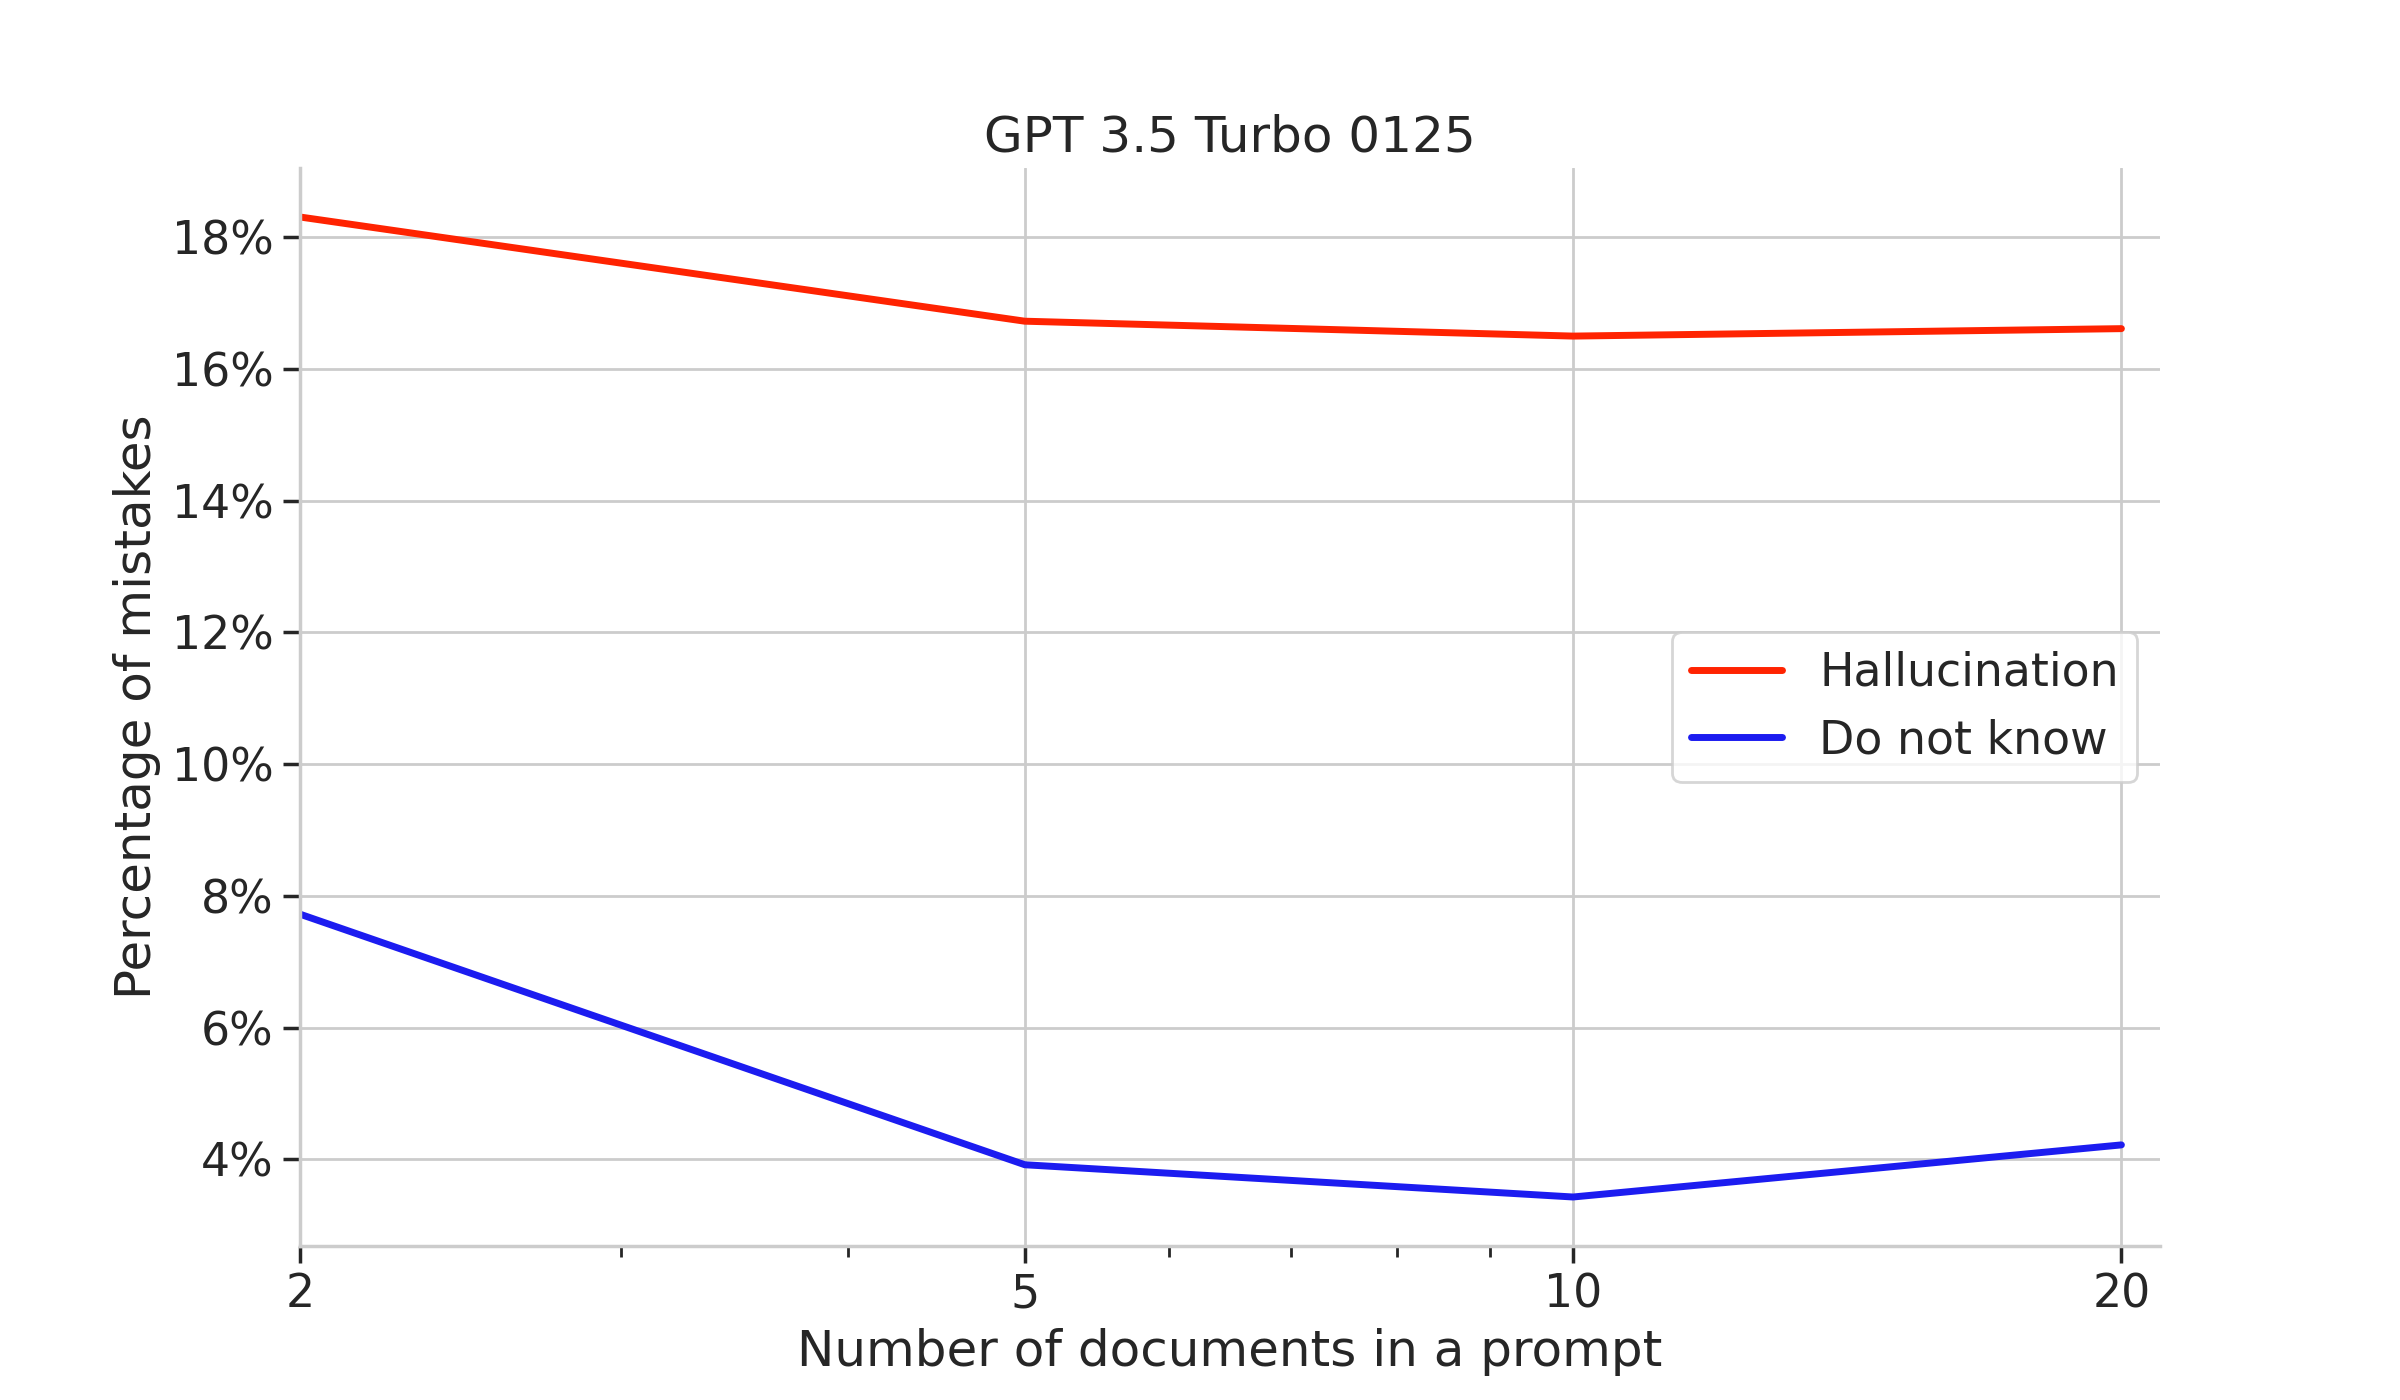 Mistake analysis of GPT 3.5 Turbo 0125